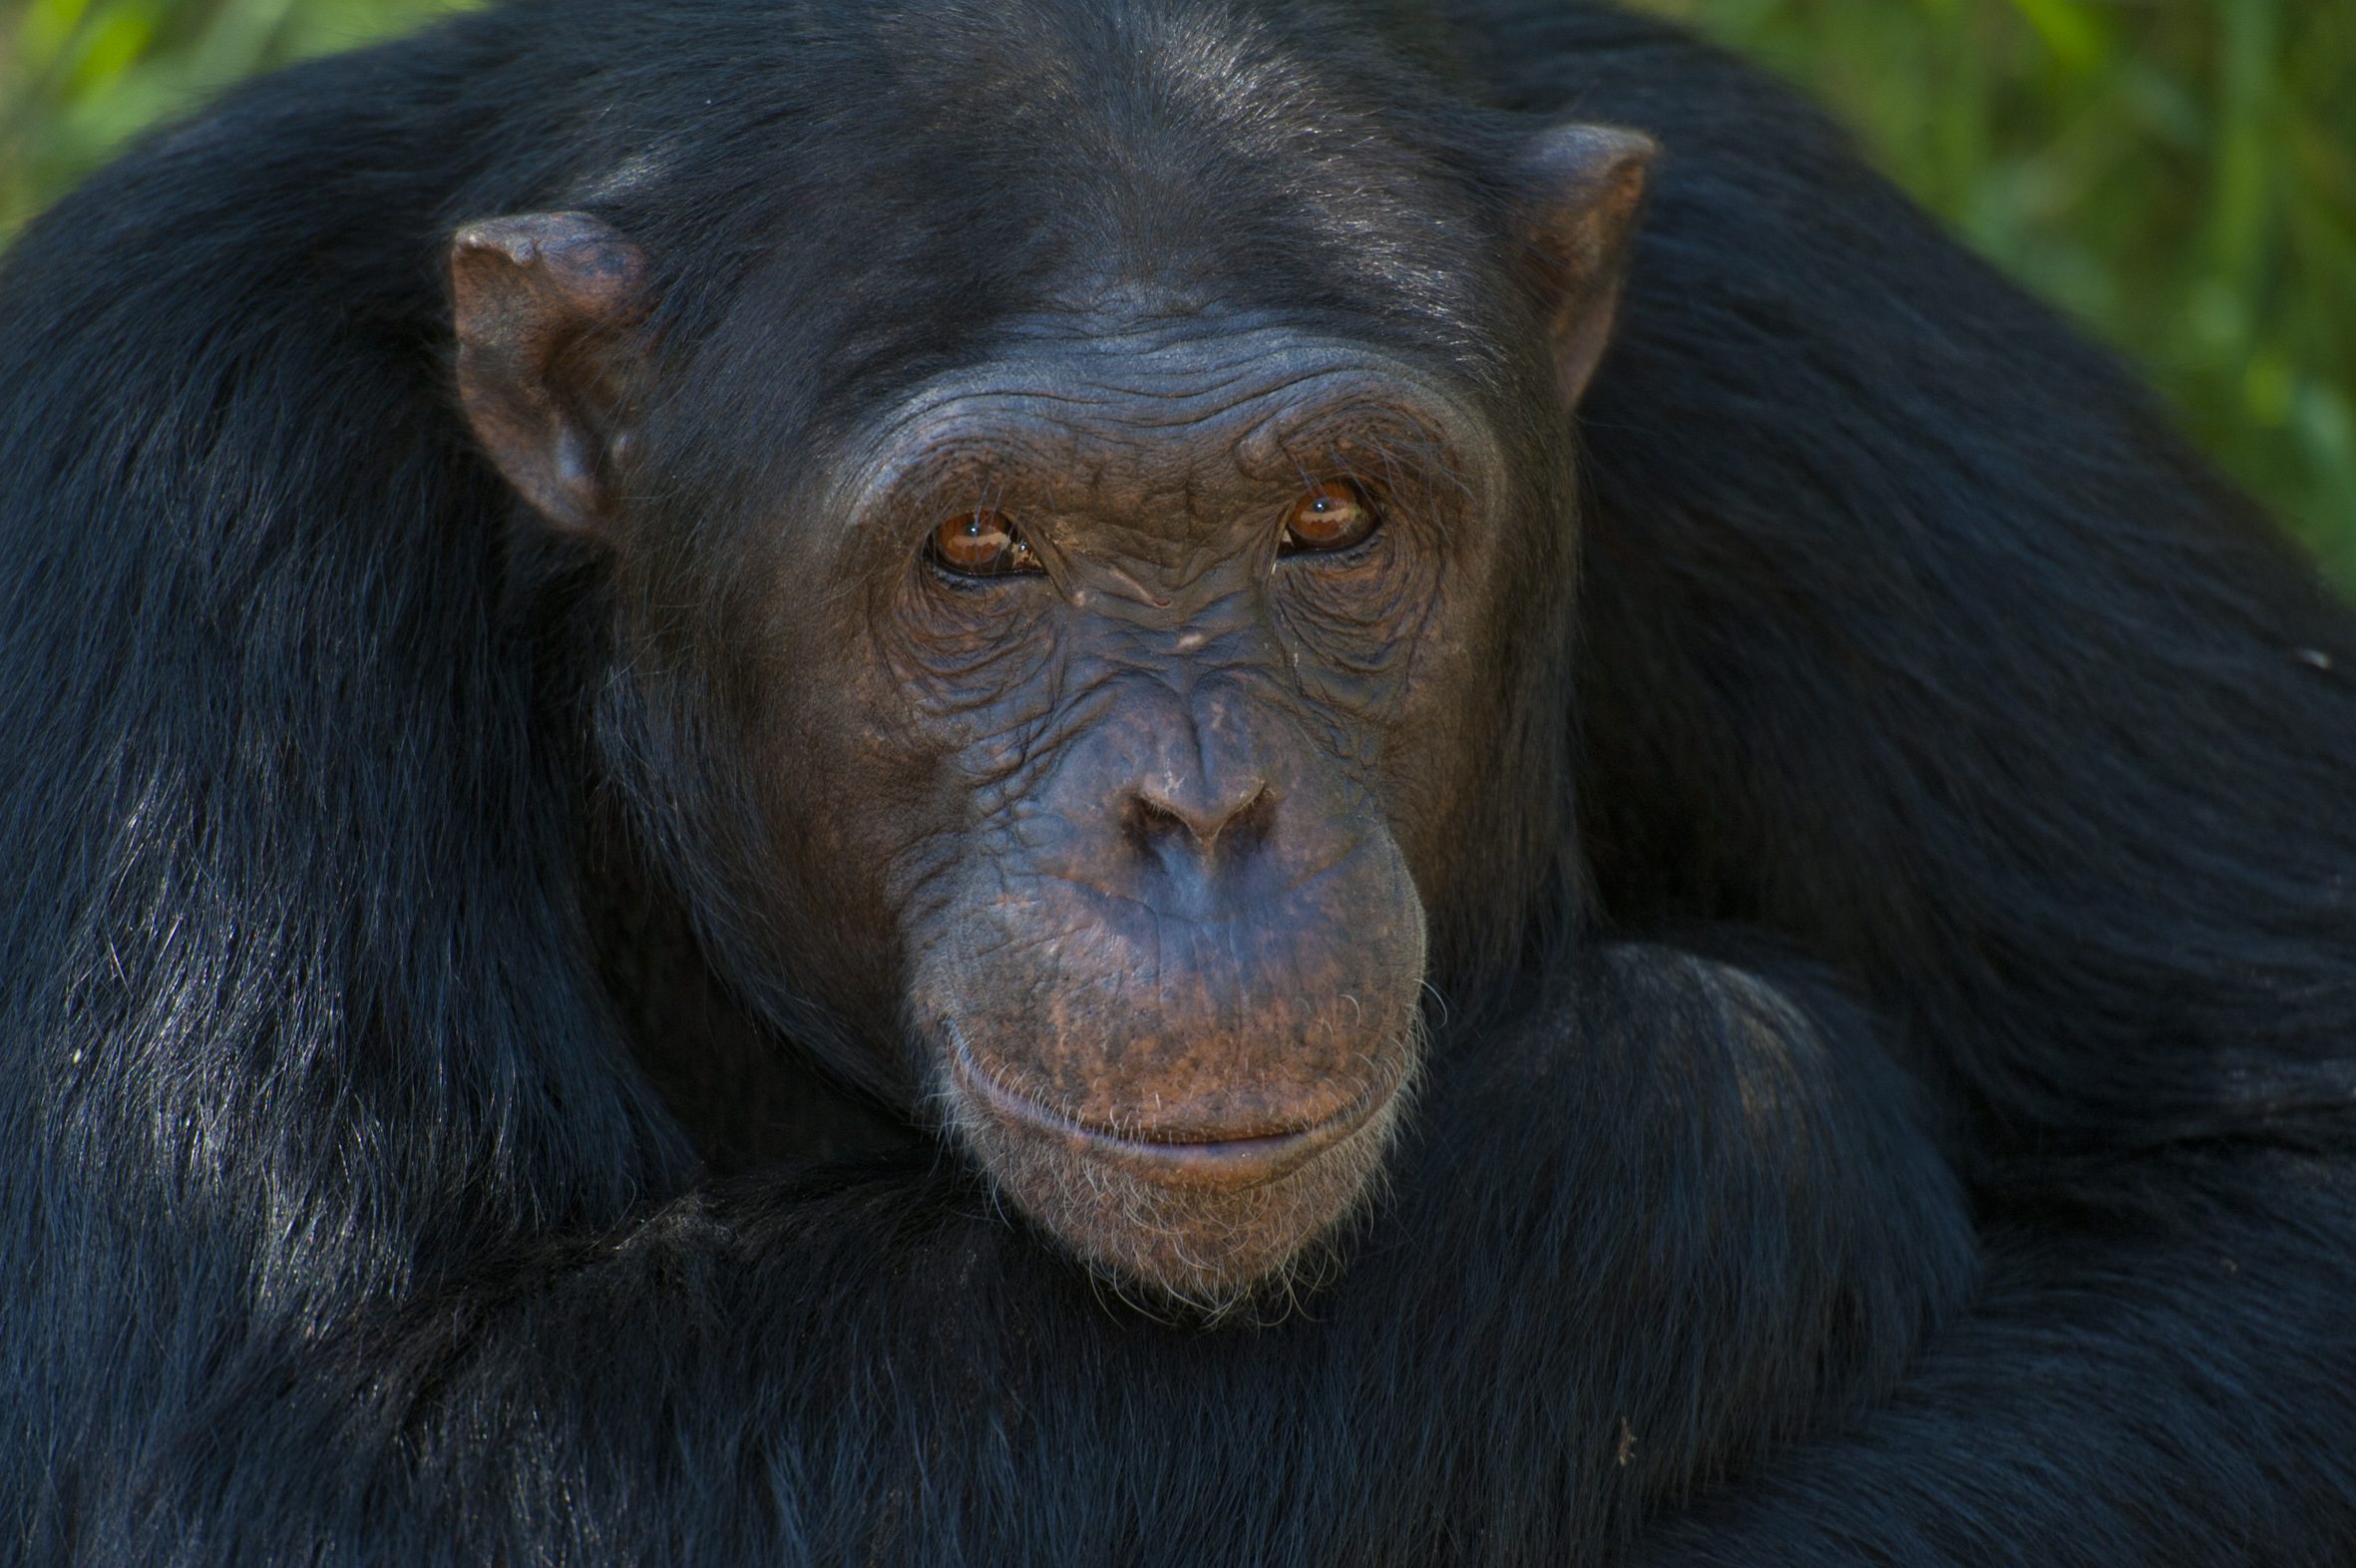 Choosing responsible wildlife encounters on safari, Chimpanzee